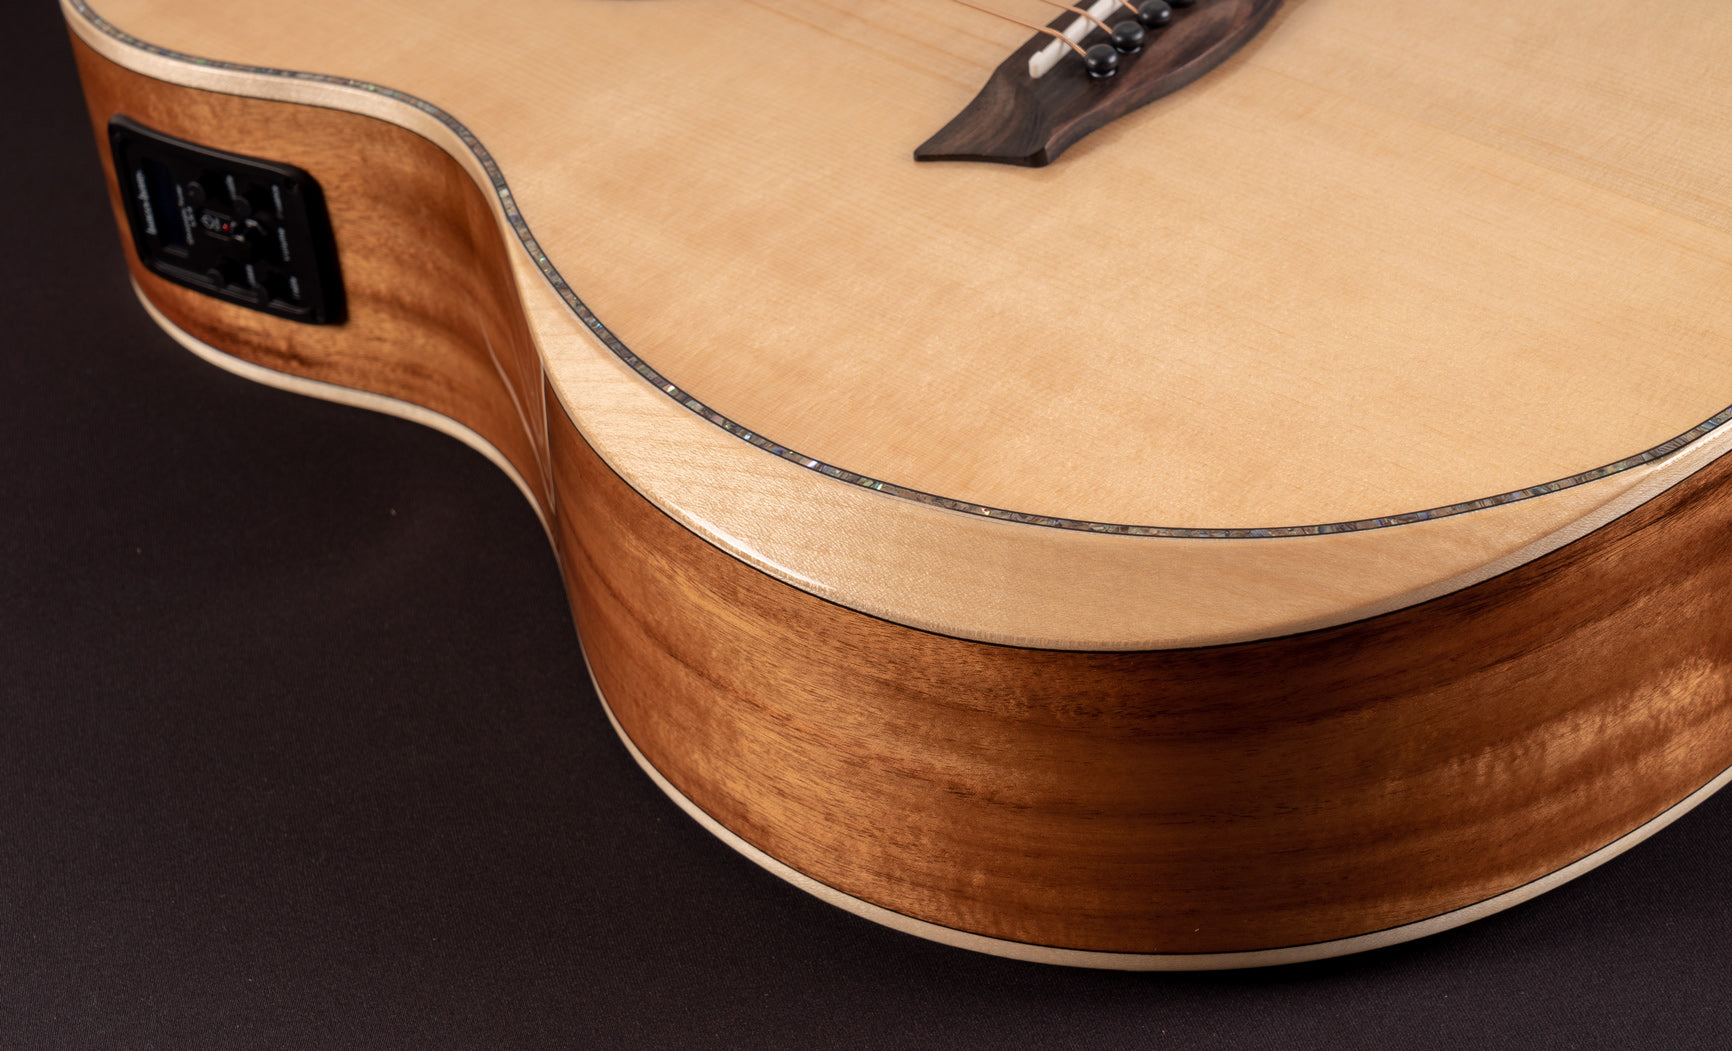 Washburn Bella Tono Studio 56 CE Acoustic Guitar Solid Spruce/Acacia BTSC56SCE-D